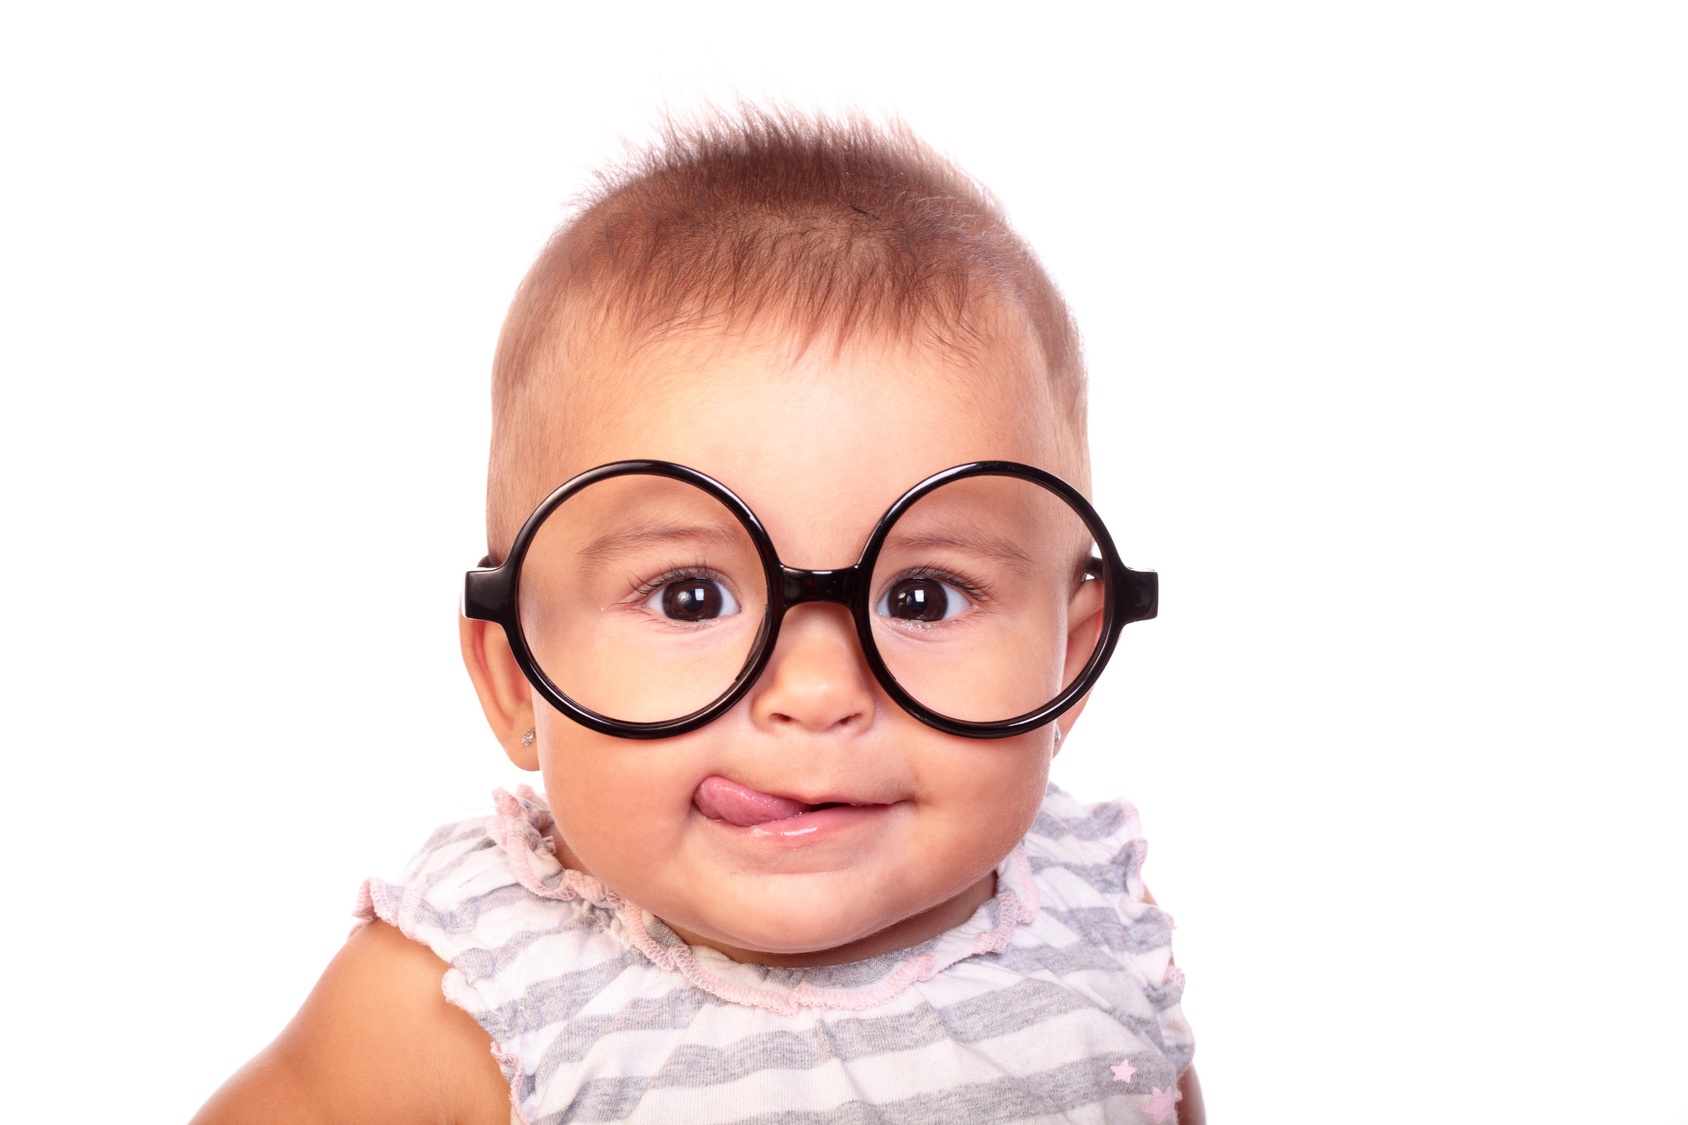 Oculoplastic problems in children